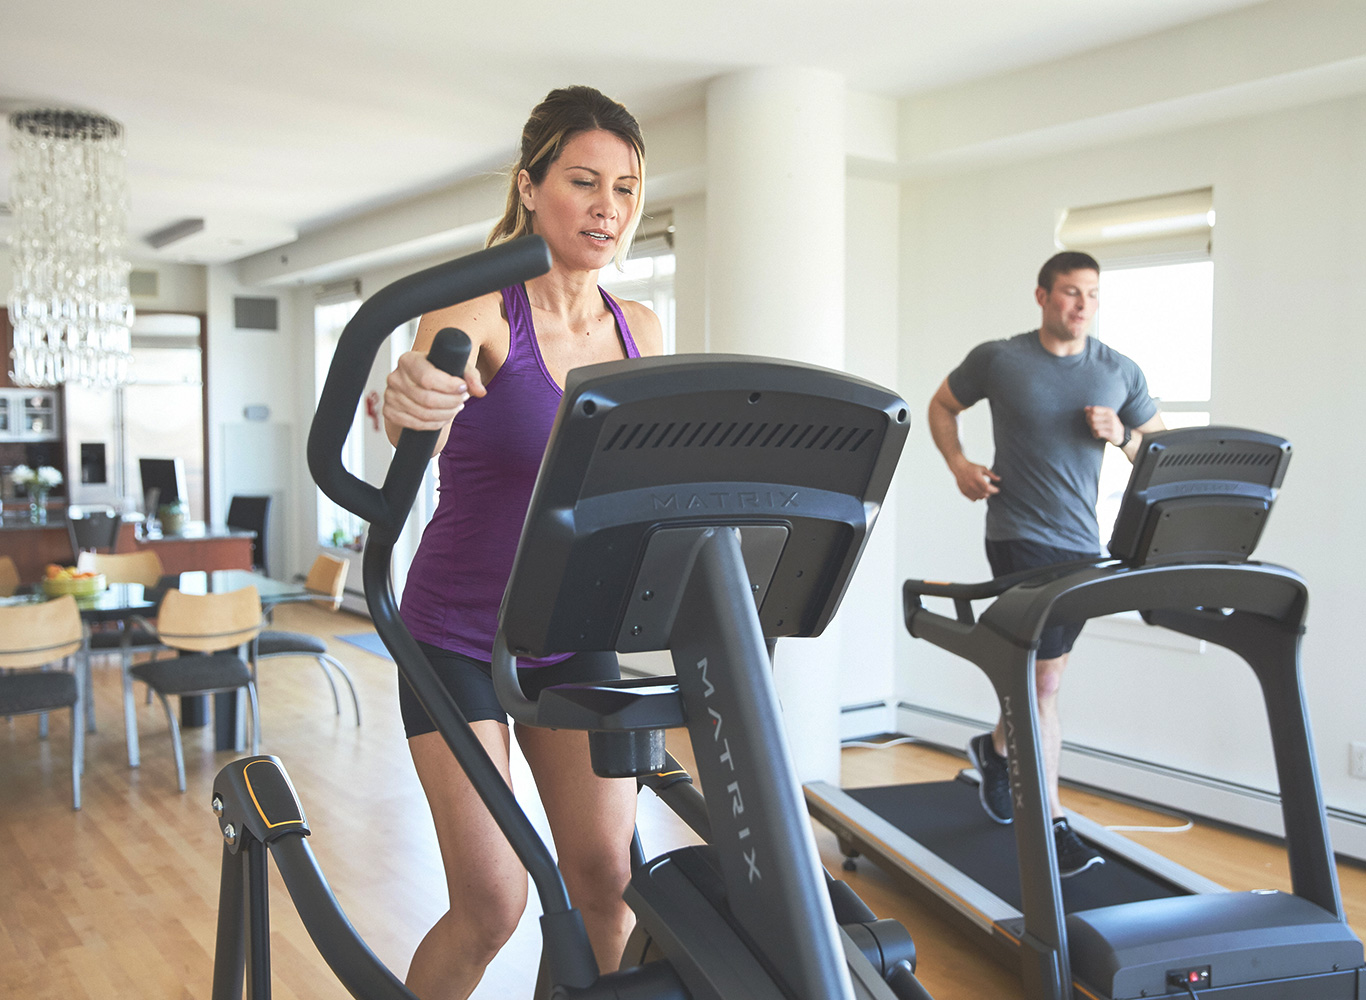 Treadmills Ellipticals Cardio Strength Equipment For The Home Johnson Fitness Wellness